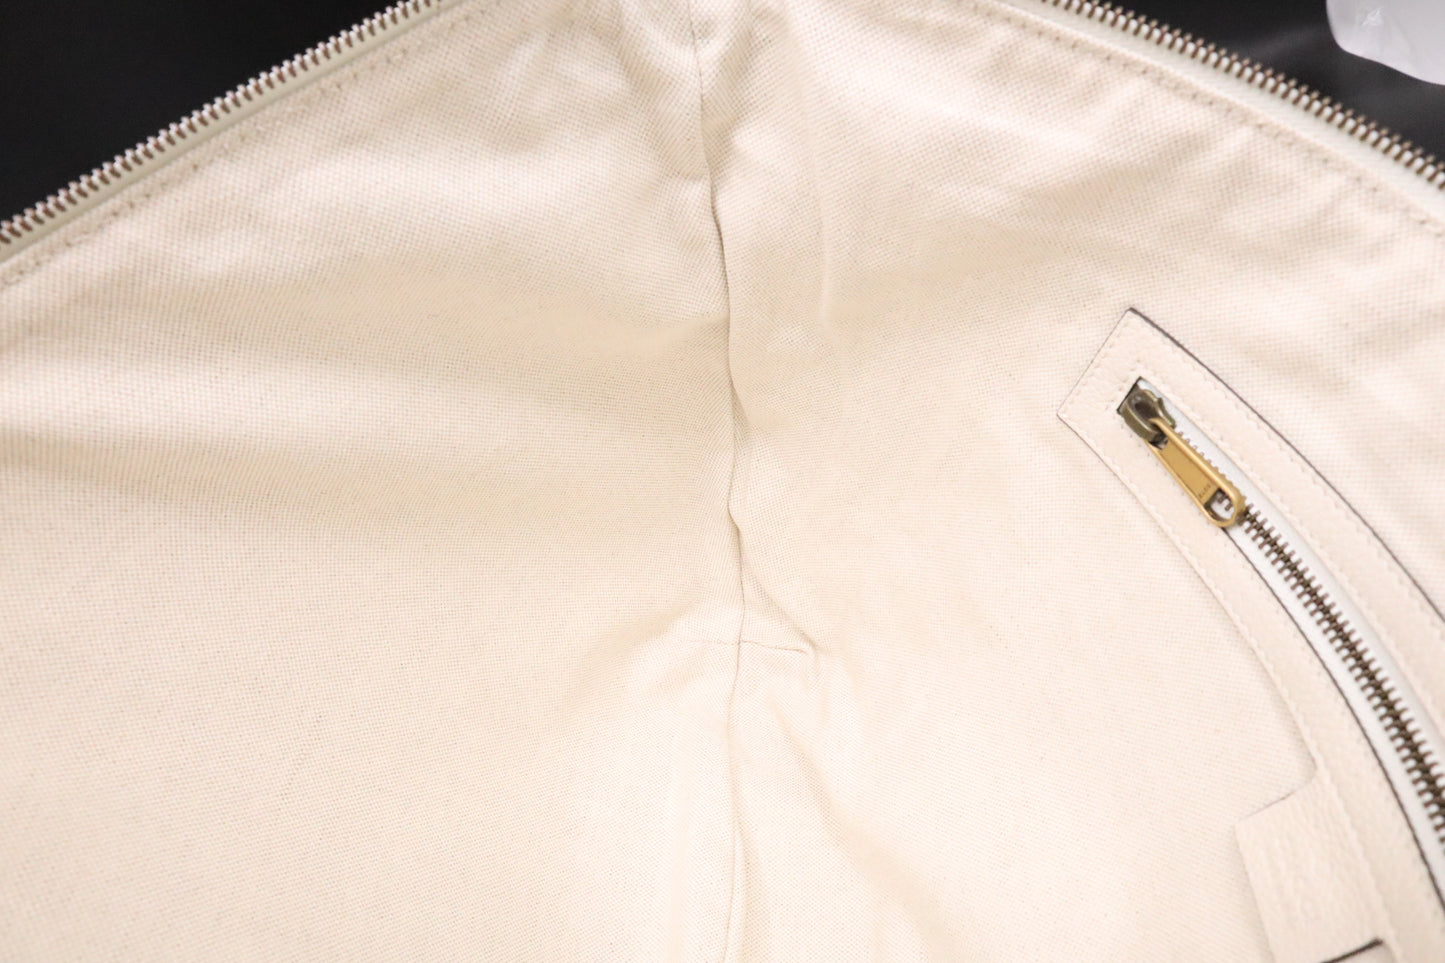 Gucci Shoulder Bag in White Leather